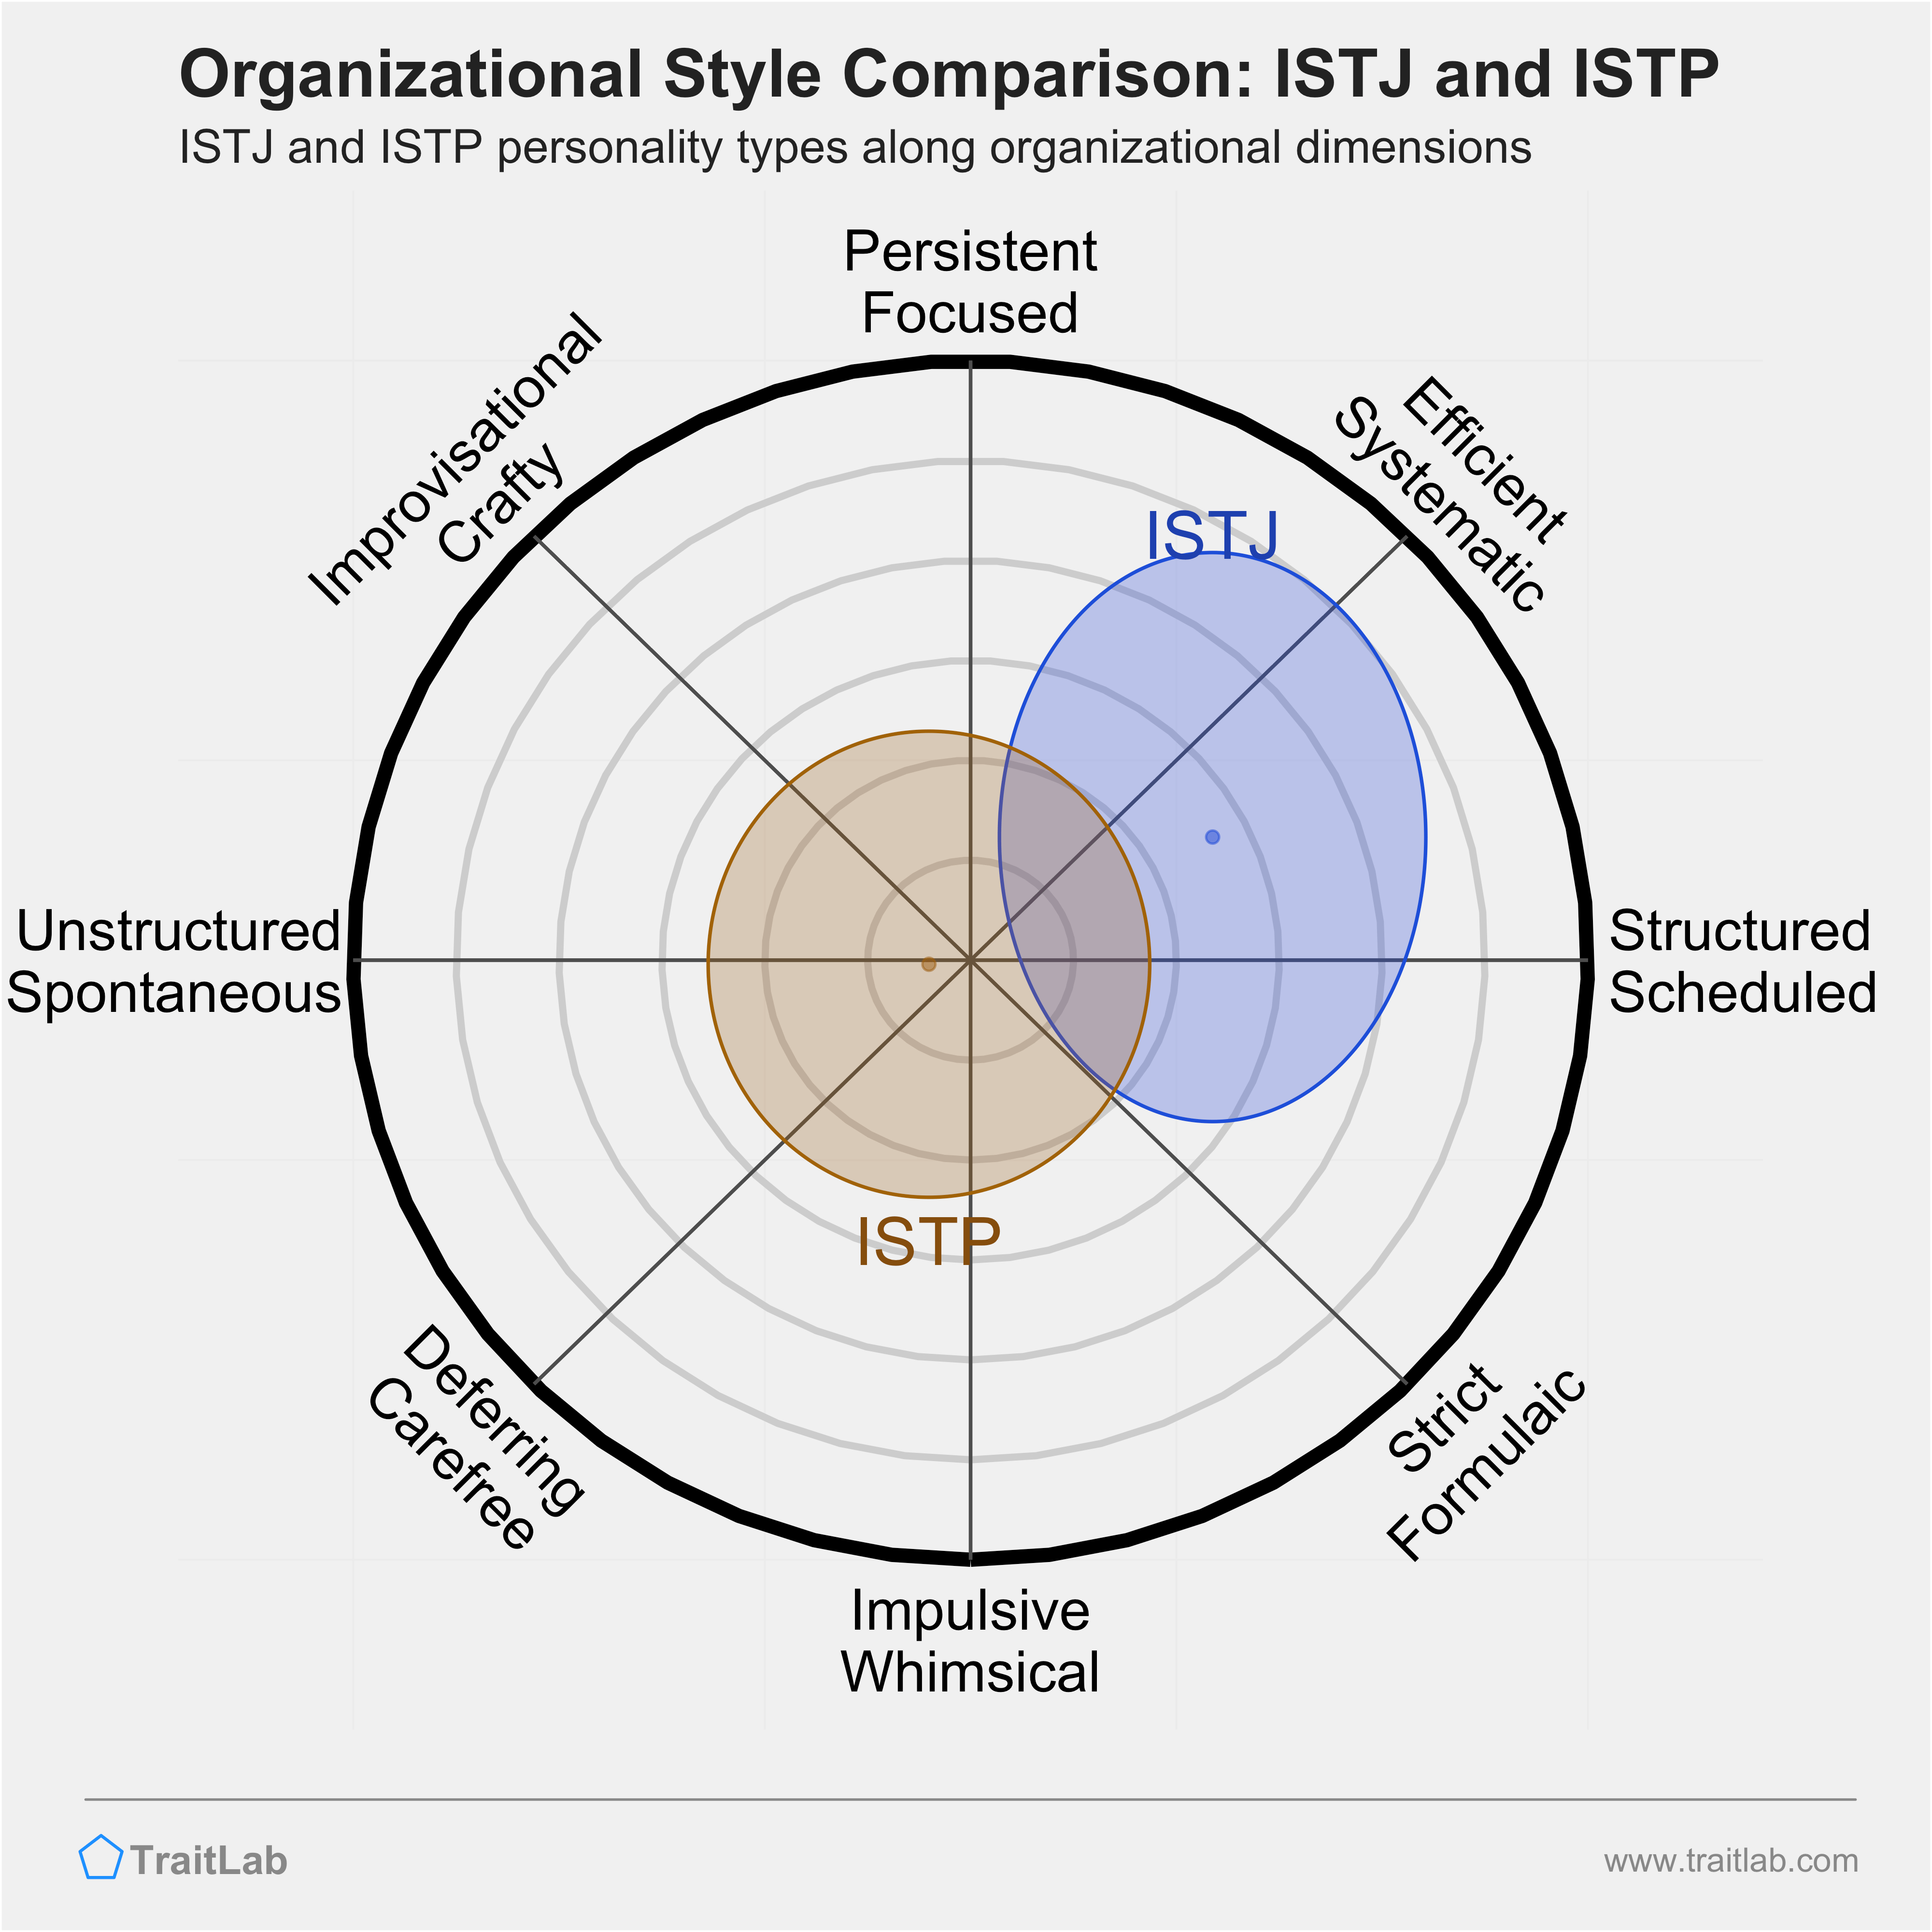 ISTJ and ISTP comparison across organizational dimensions